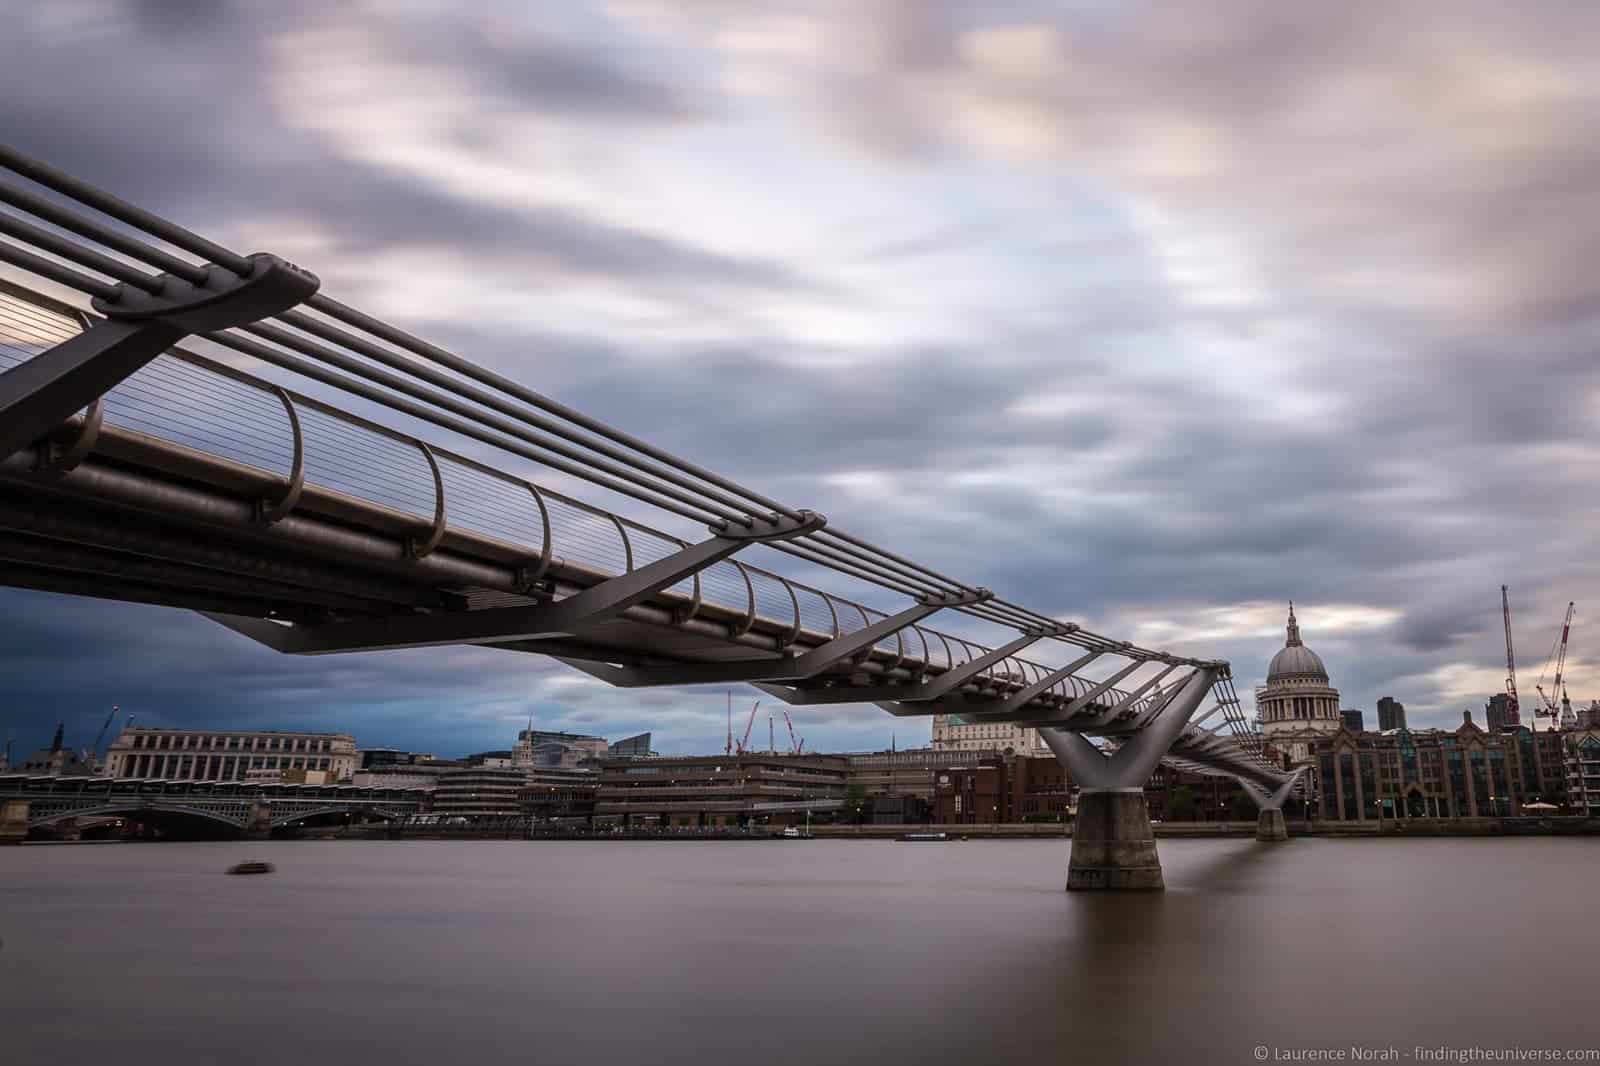 A photo of the Millennium Bridge in London.